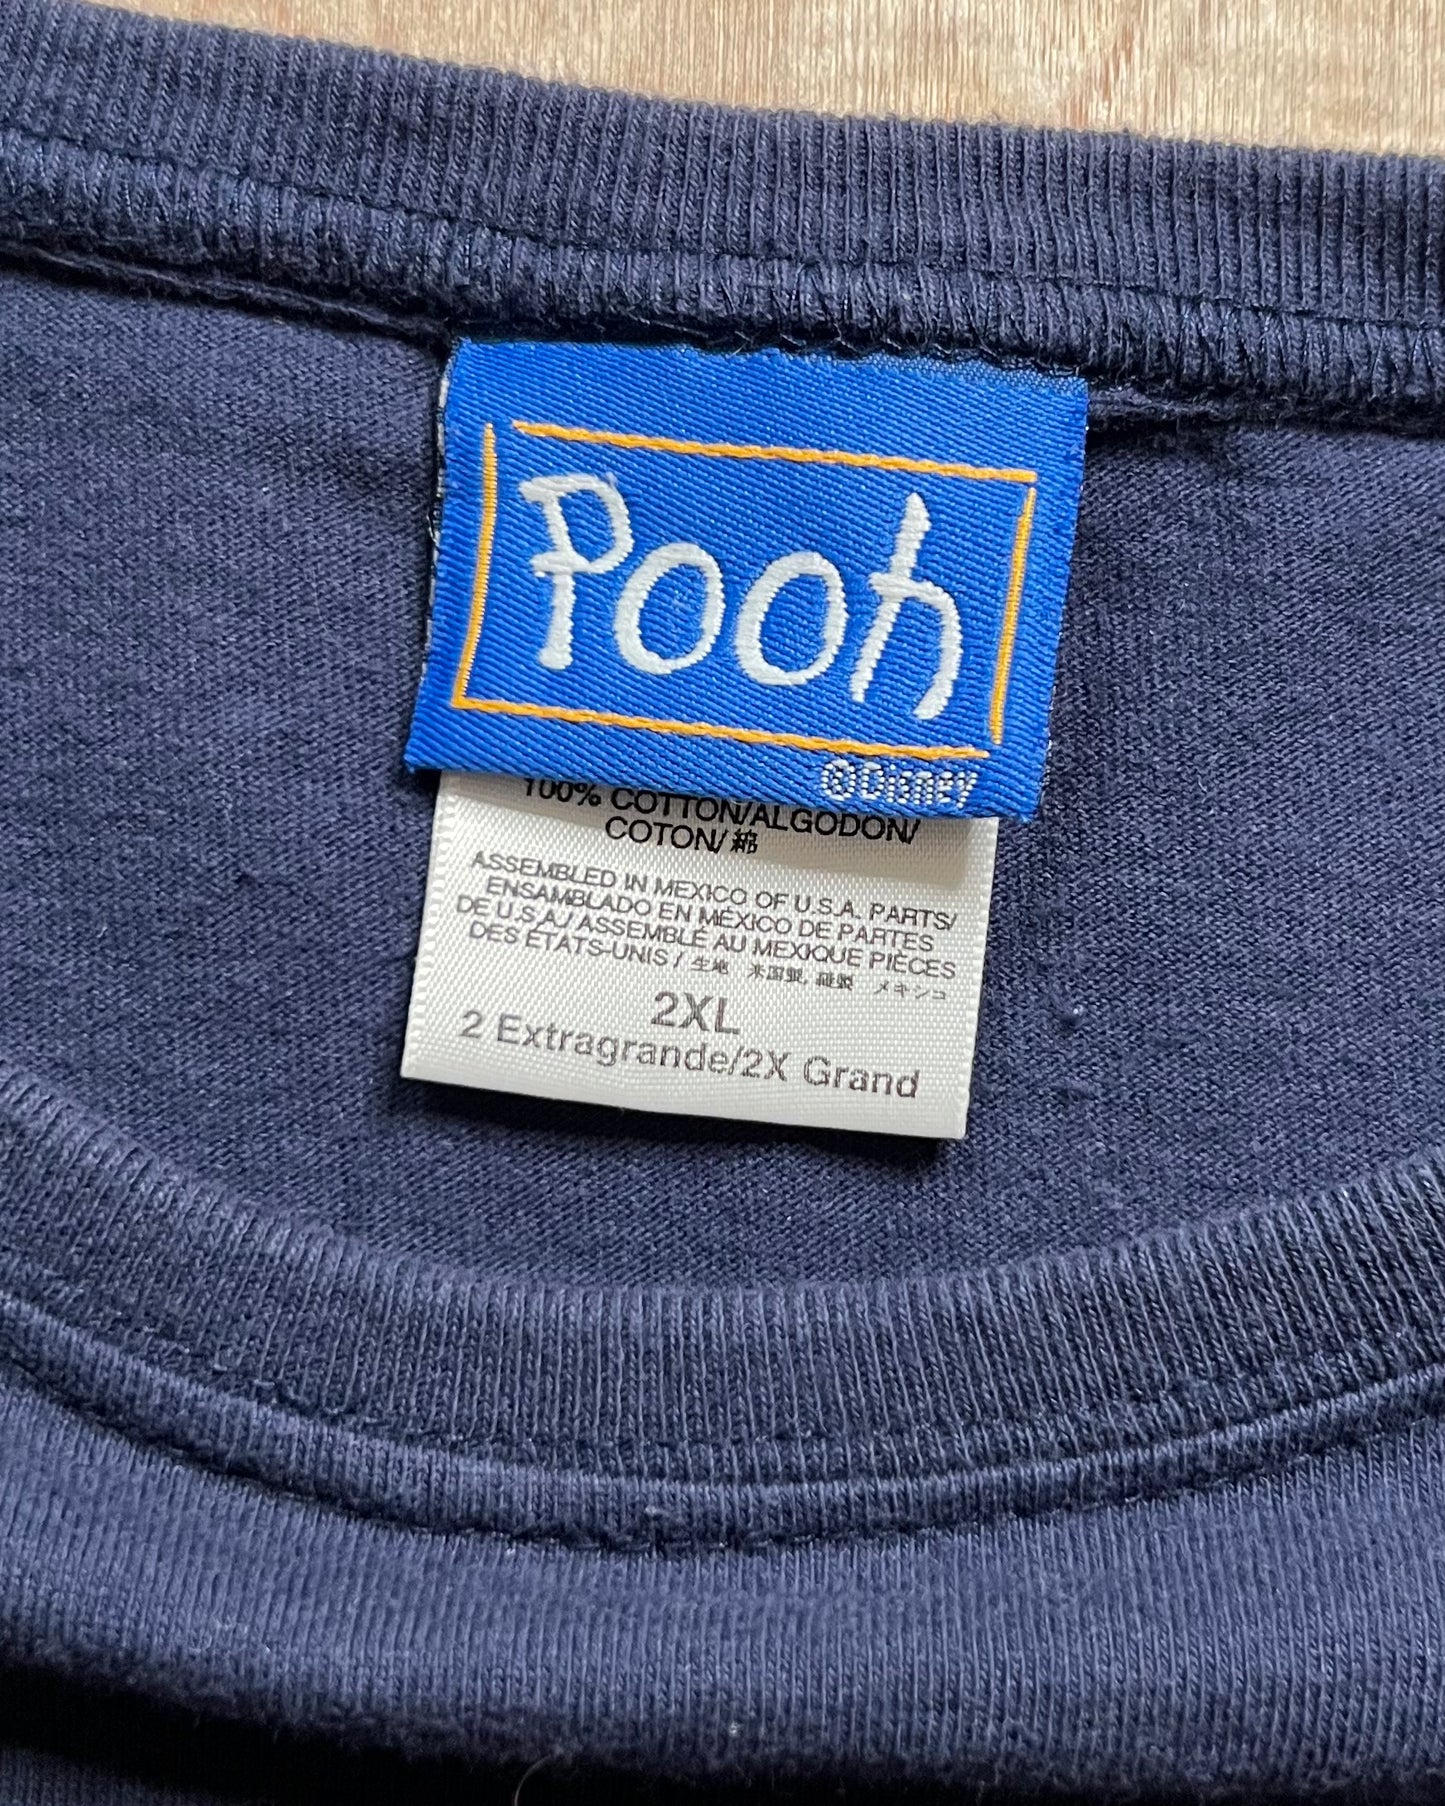 Vintage Pooh x Tigger Pocket T-Shirt